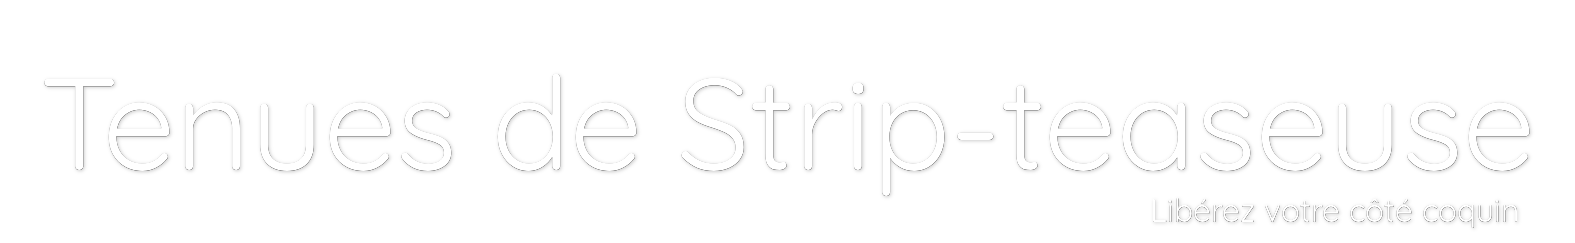 Tenues de Strip-teaseuse-2